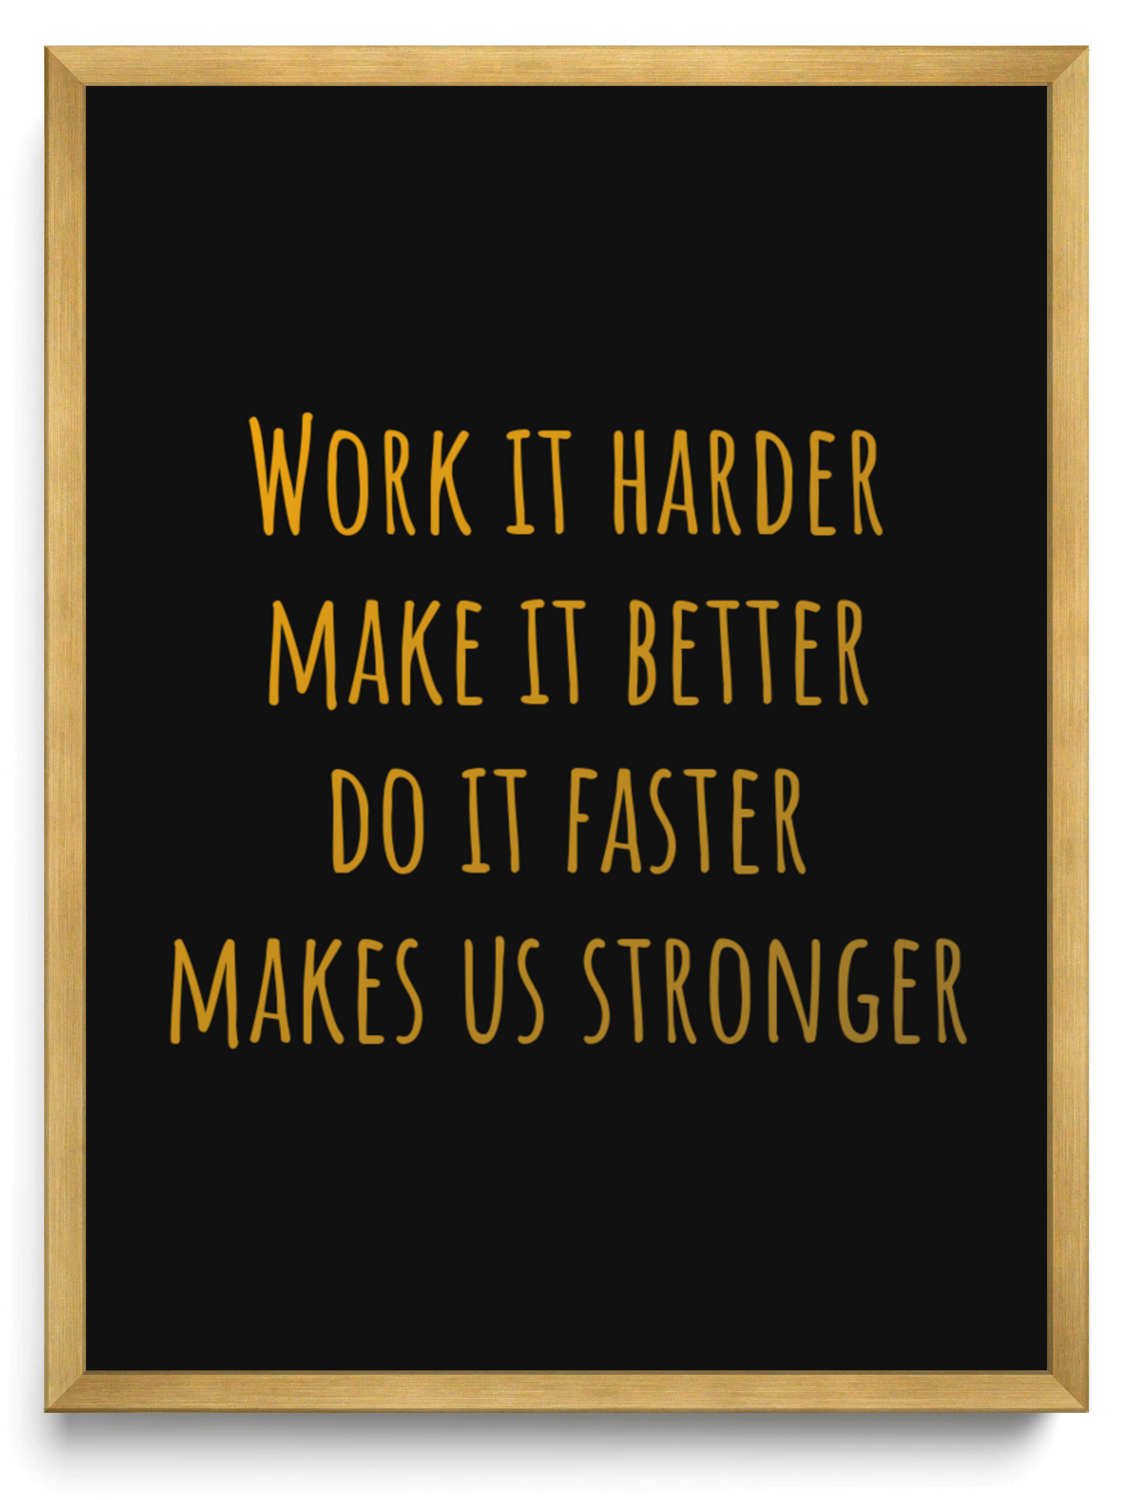 Work it harder make it better do it faster makes us stronger framed typographic print